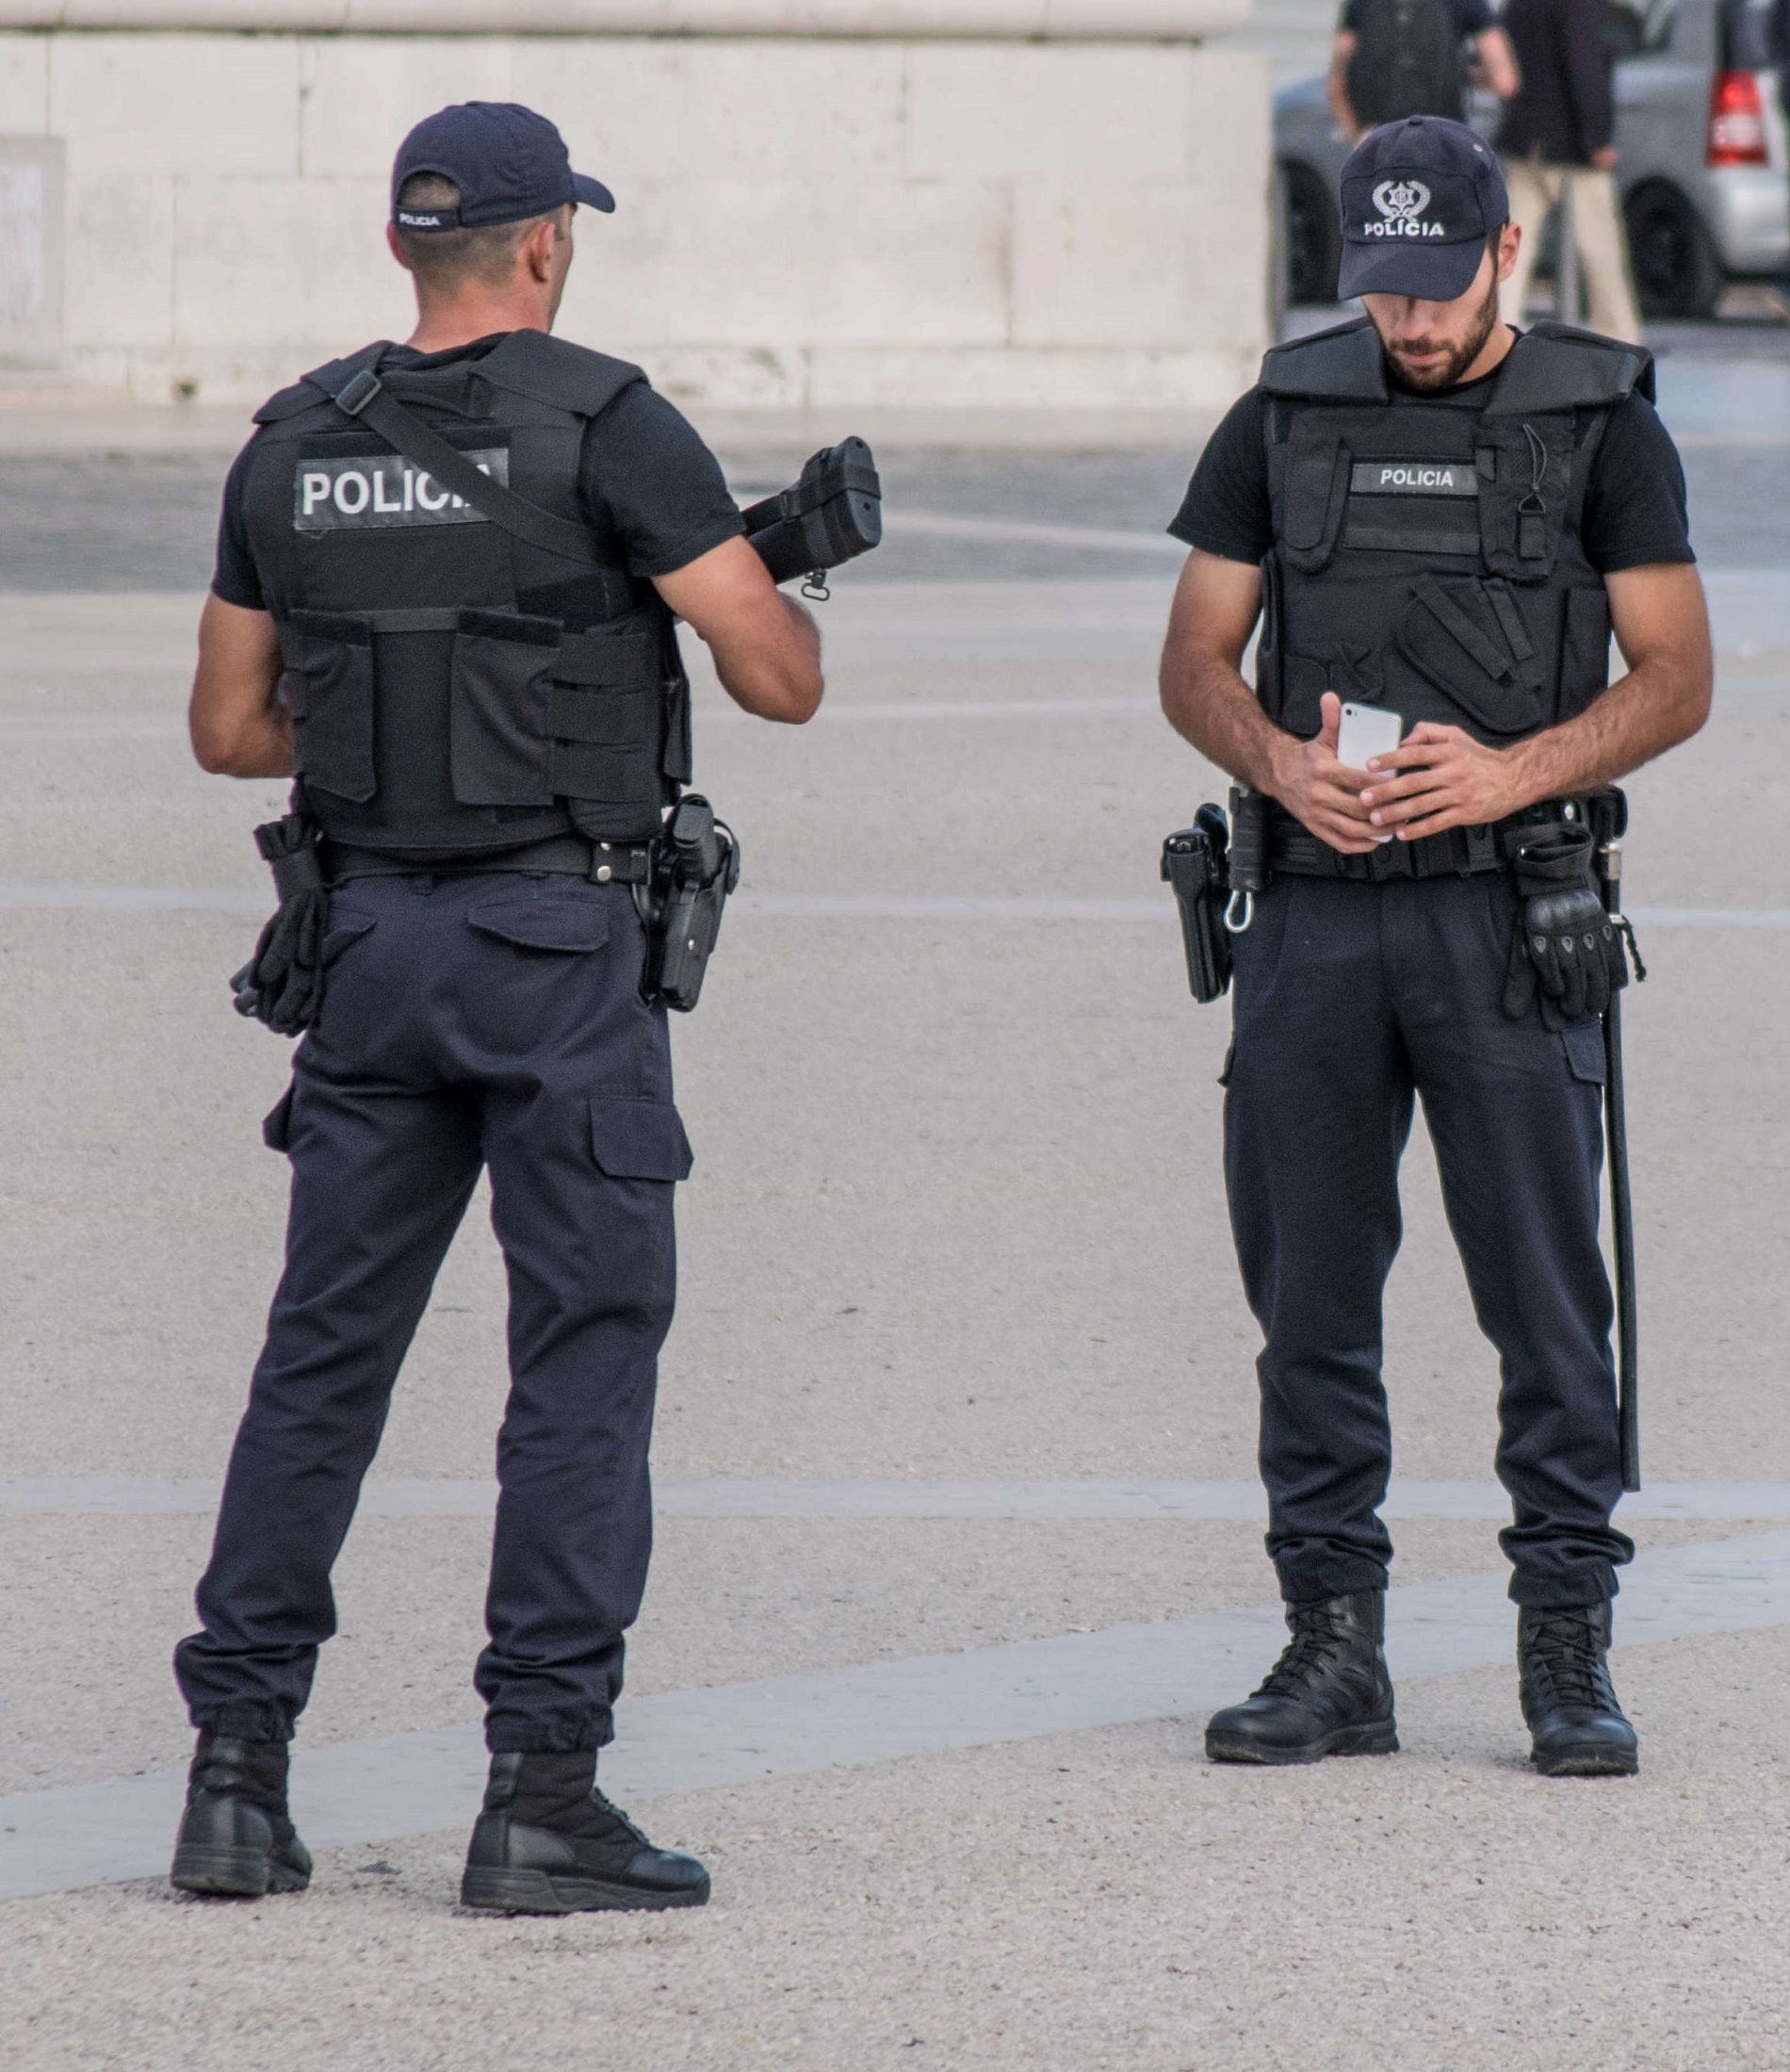 Policía Portugal / Wikimedia Commons